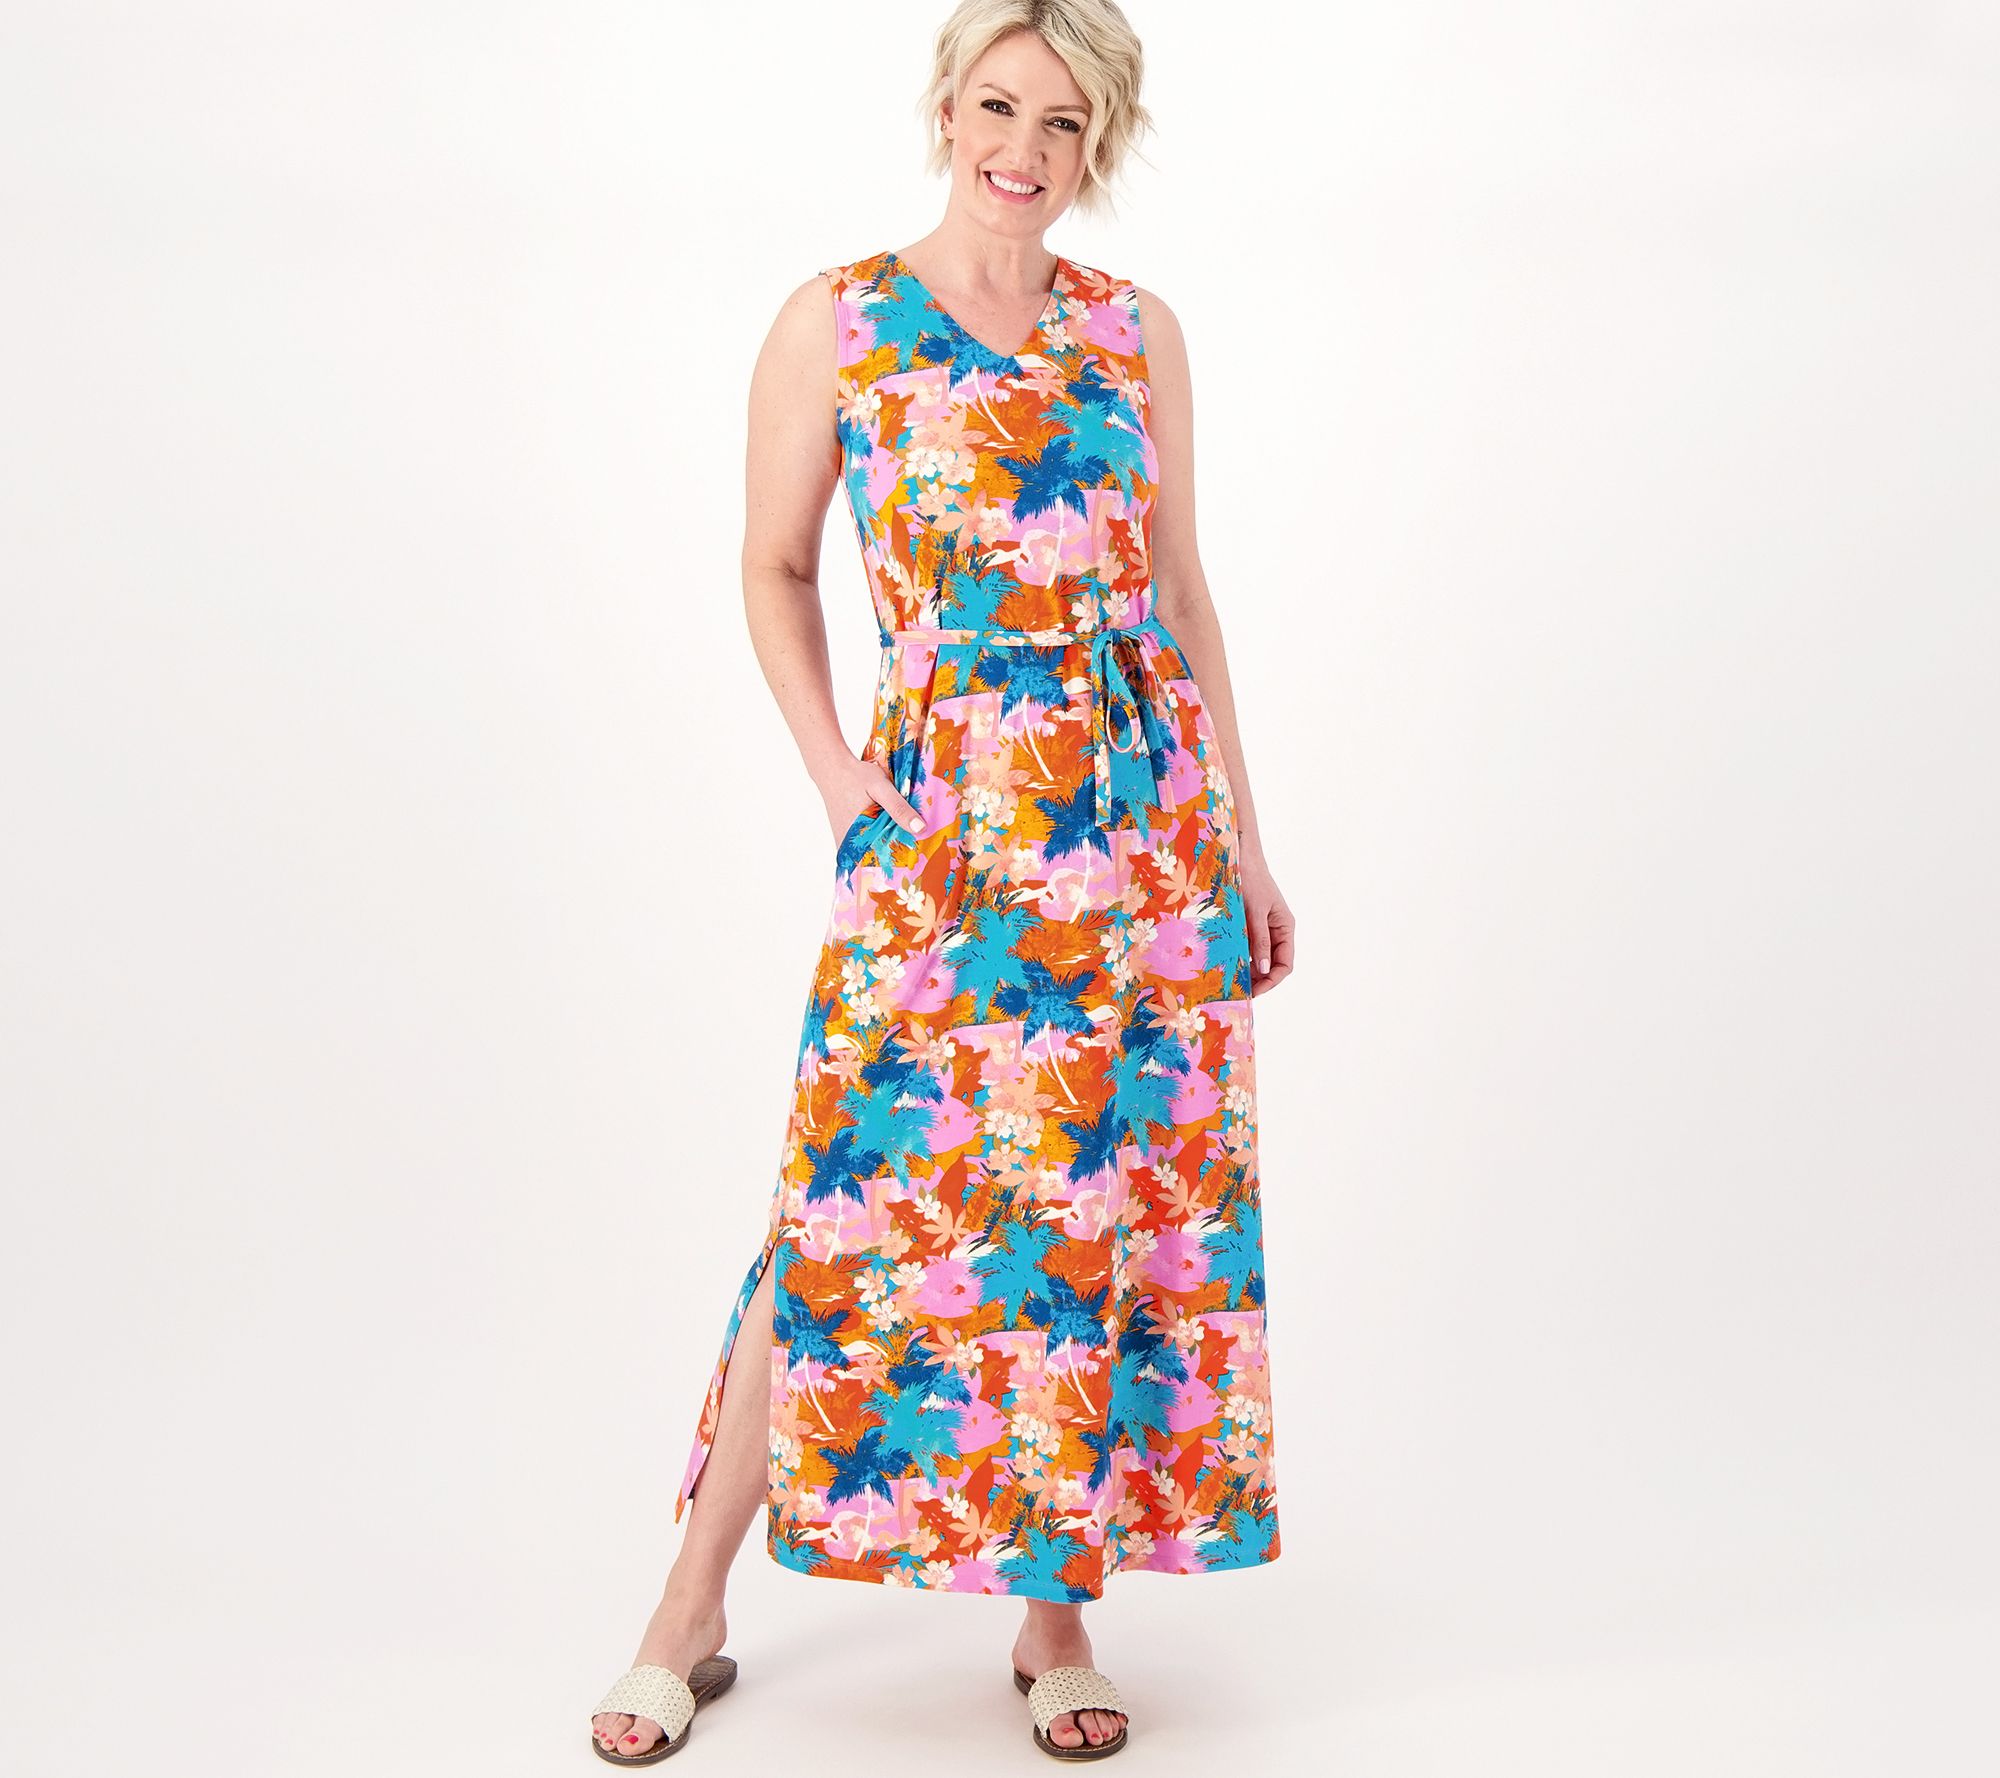 Retro Printed Slim-fit Plus Size Floral Dress Women's - Pink / XL